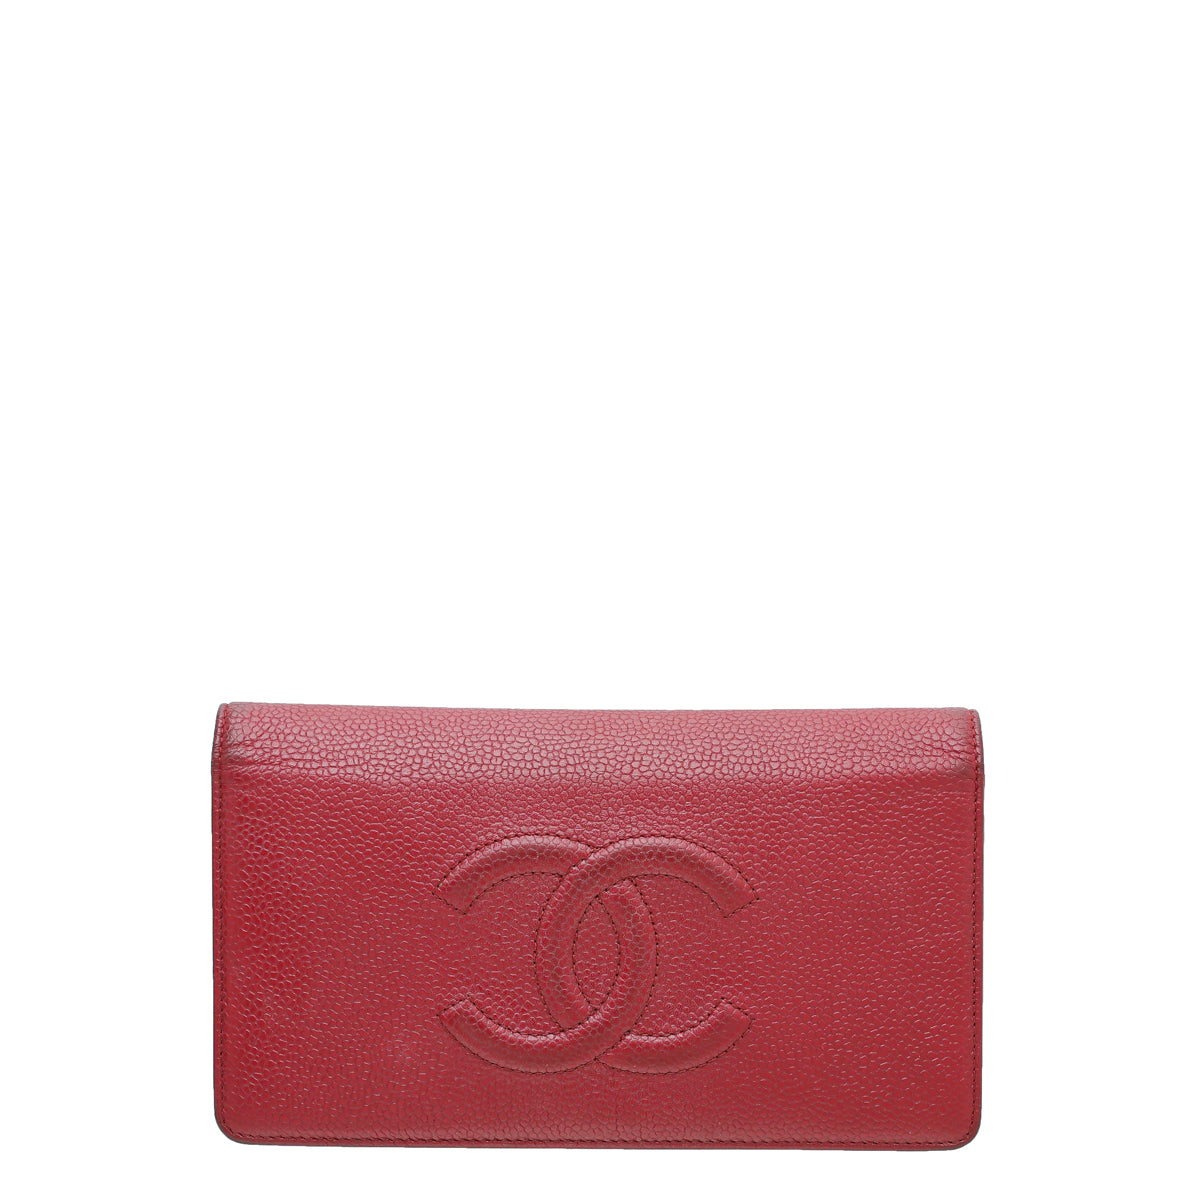 Chanel Red CC Timeless Yen Wallet